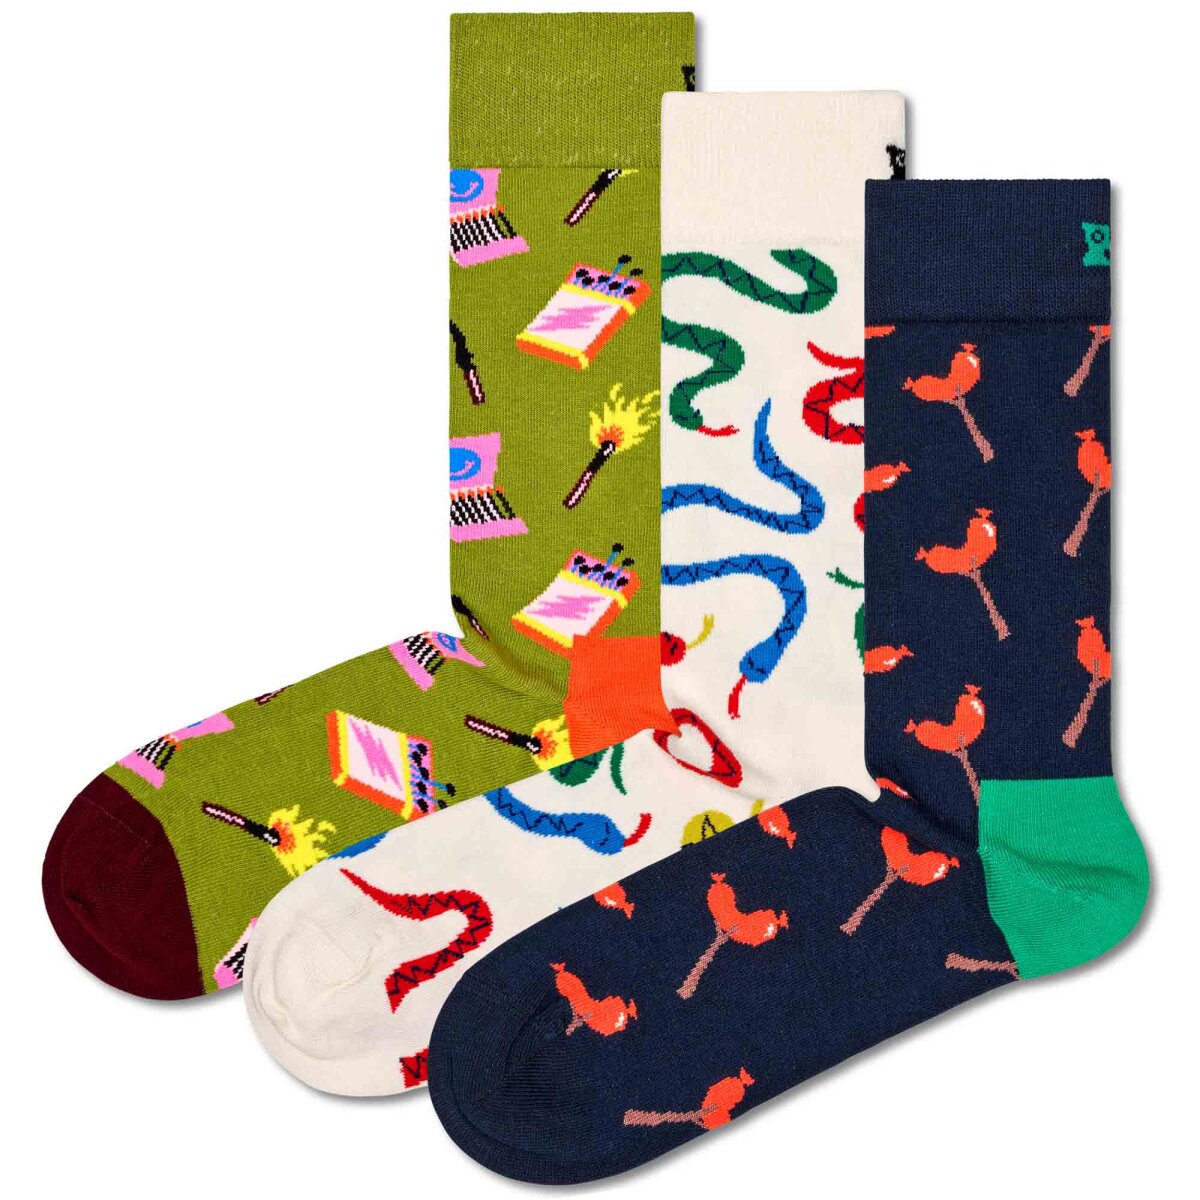 Happy Socks Unisex Socken, 3er Pack - Special Geschenkbox, Farb-Mix, 39,95 €